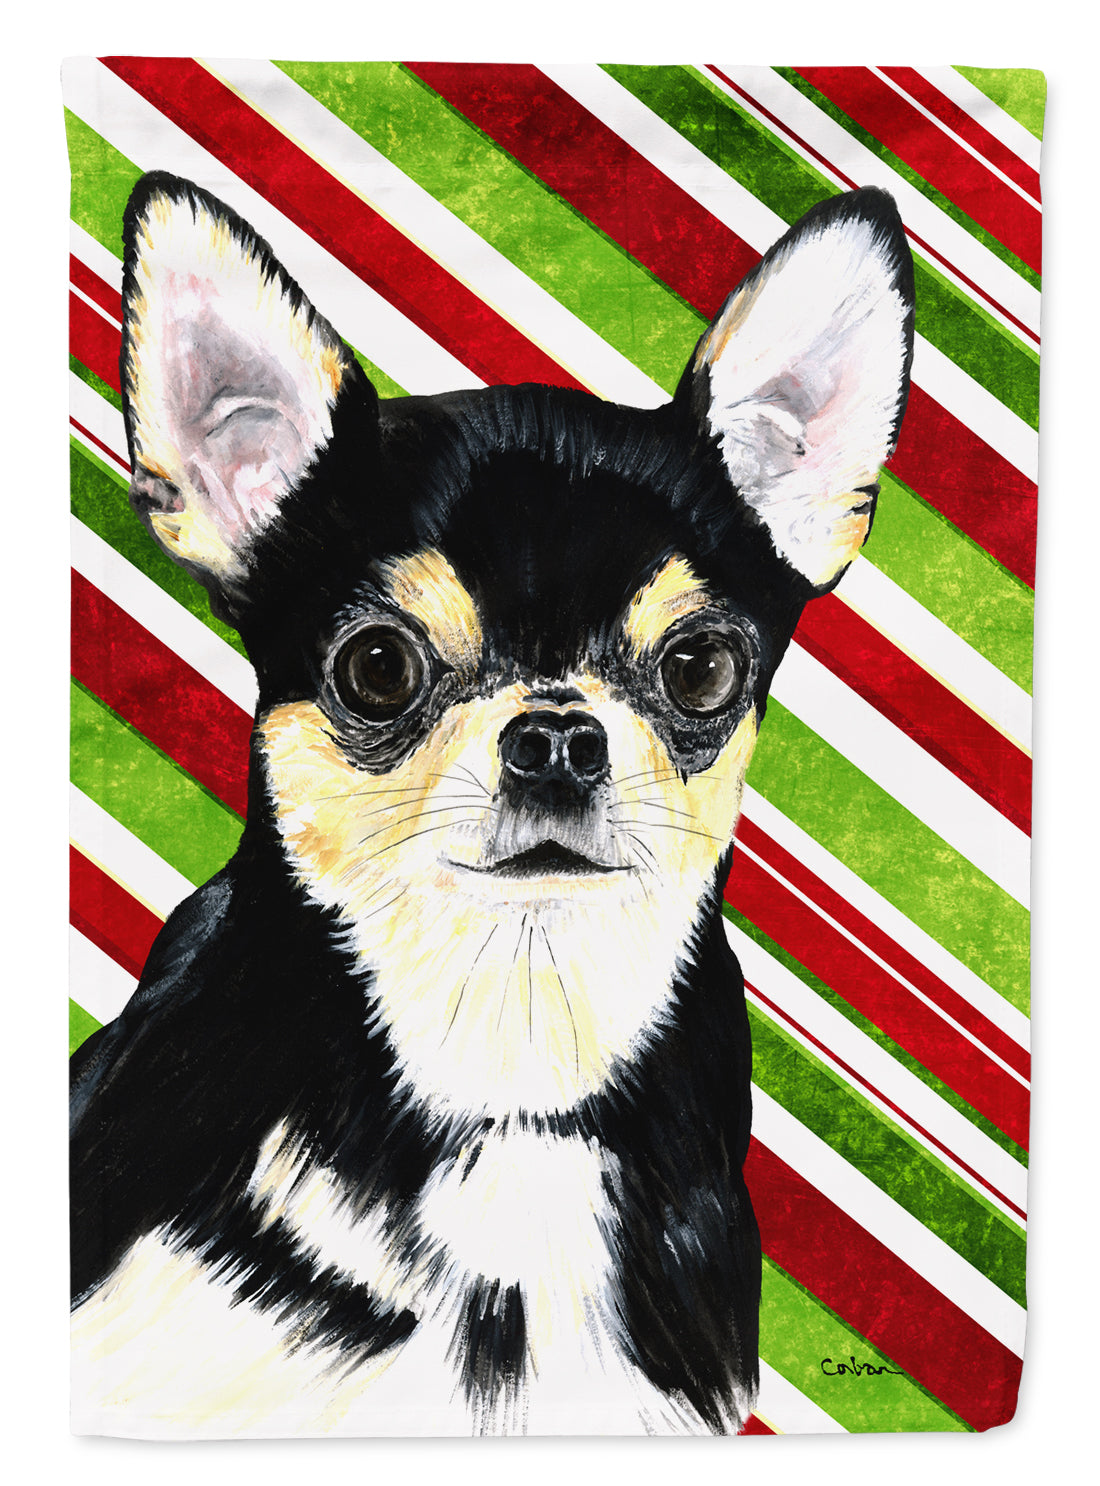 Chihuahua Candy Cane vacances Noël drapeau toile maison taille